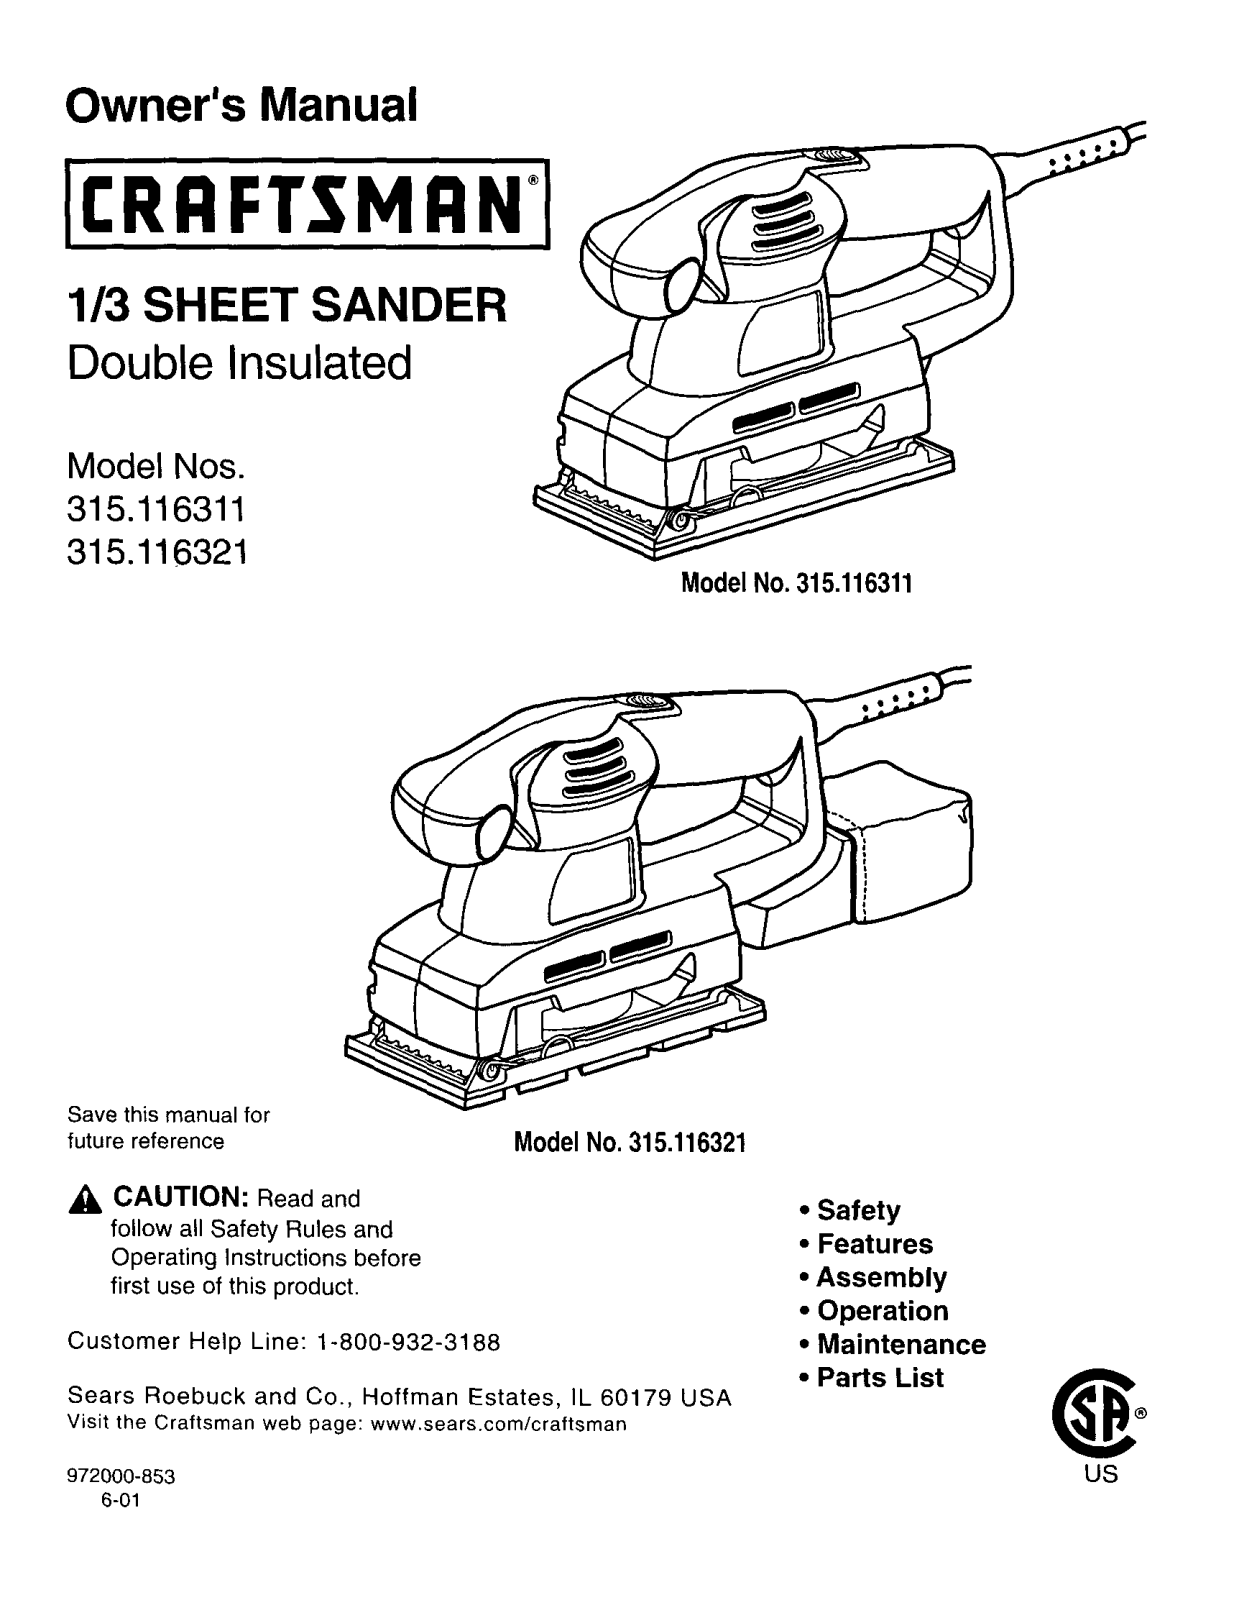 Craftsman 315116311, 315116321 Owner’s Manual